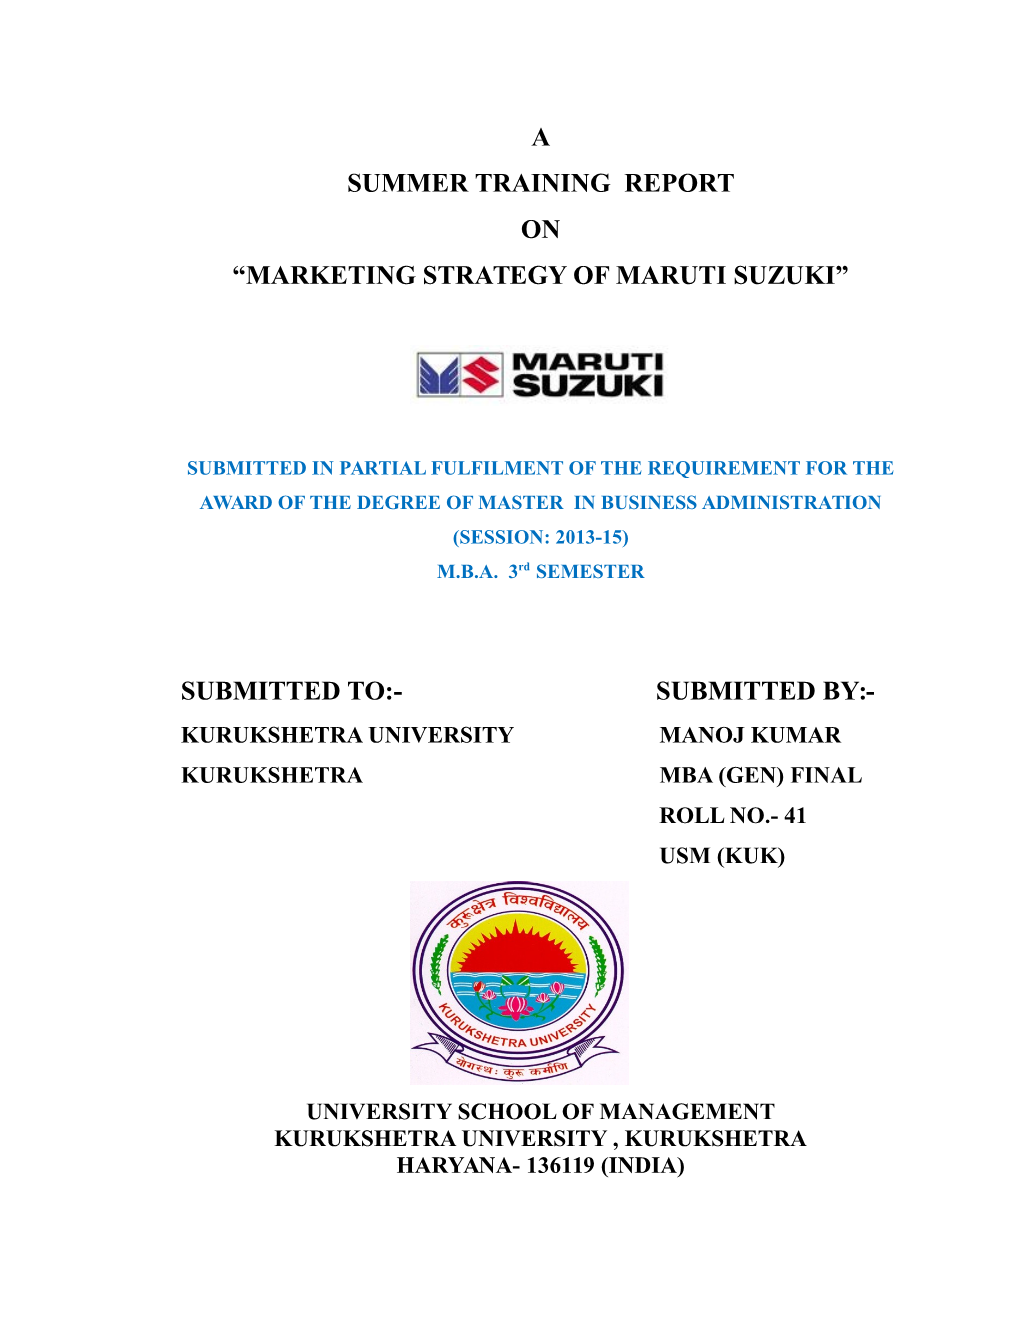 A Summer Training Report on “Marketing Strategy of Maruti Suzuki”